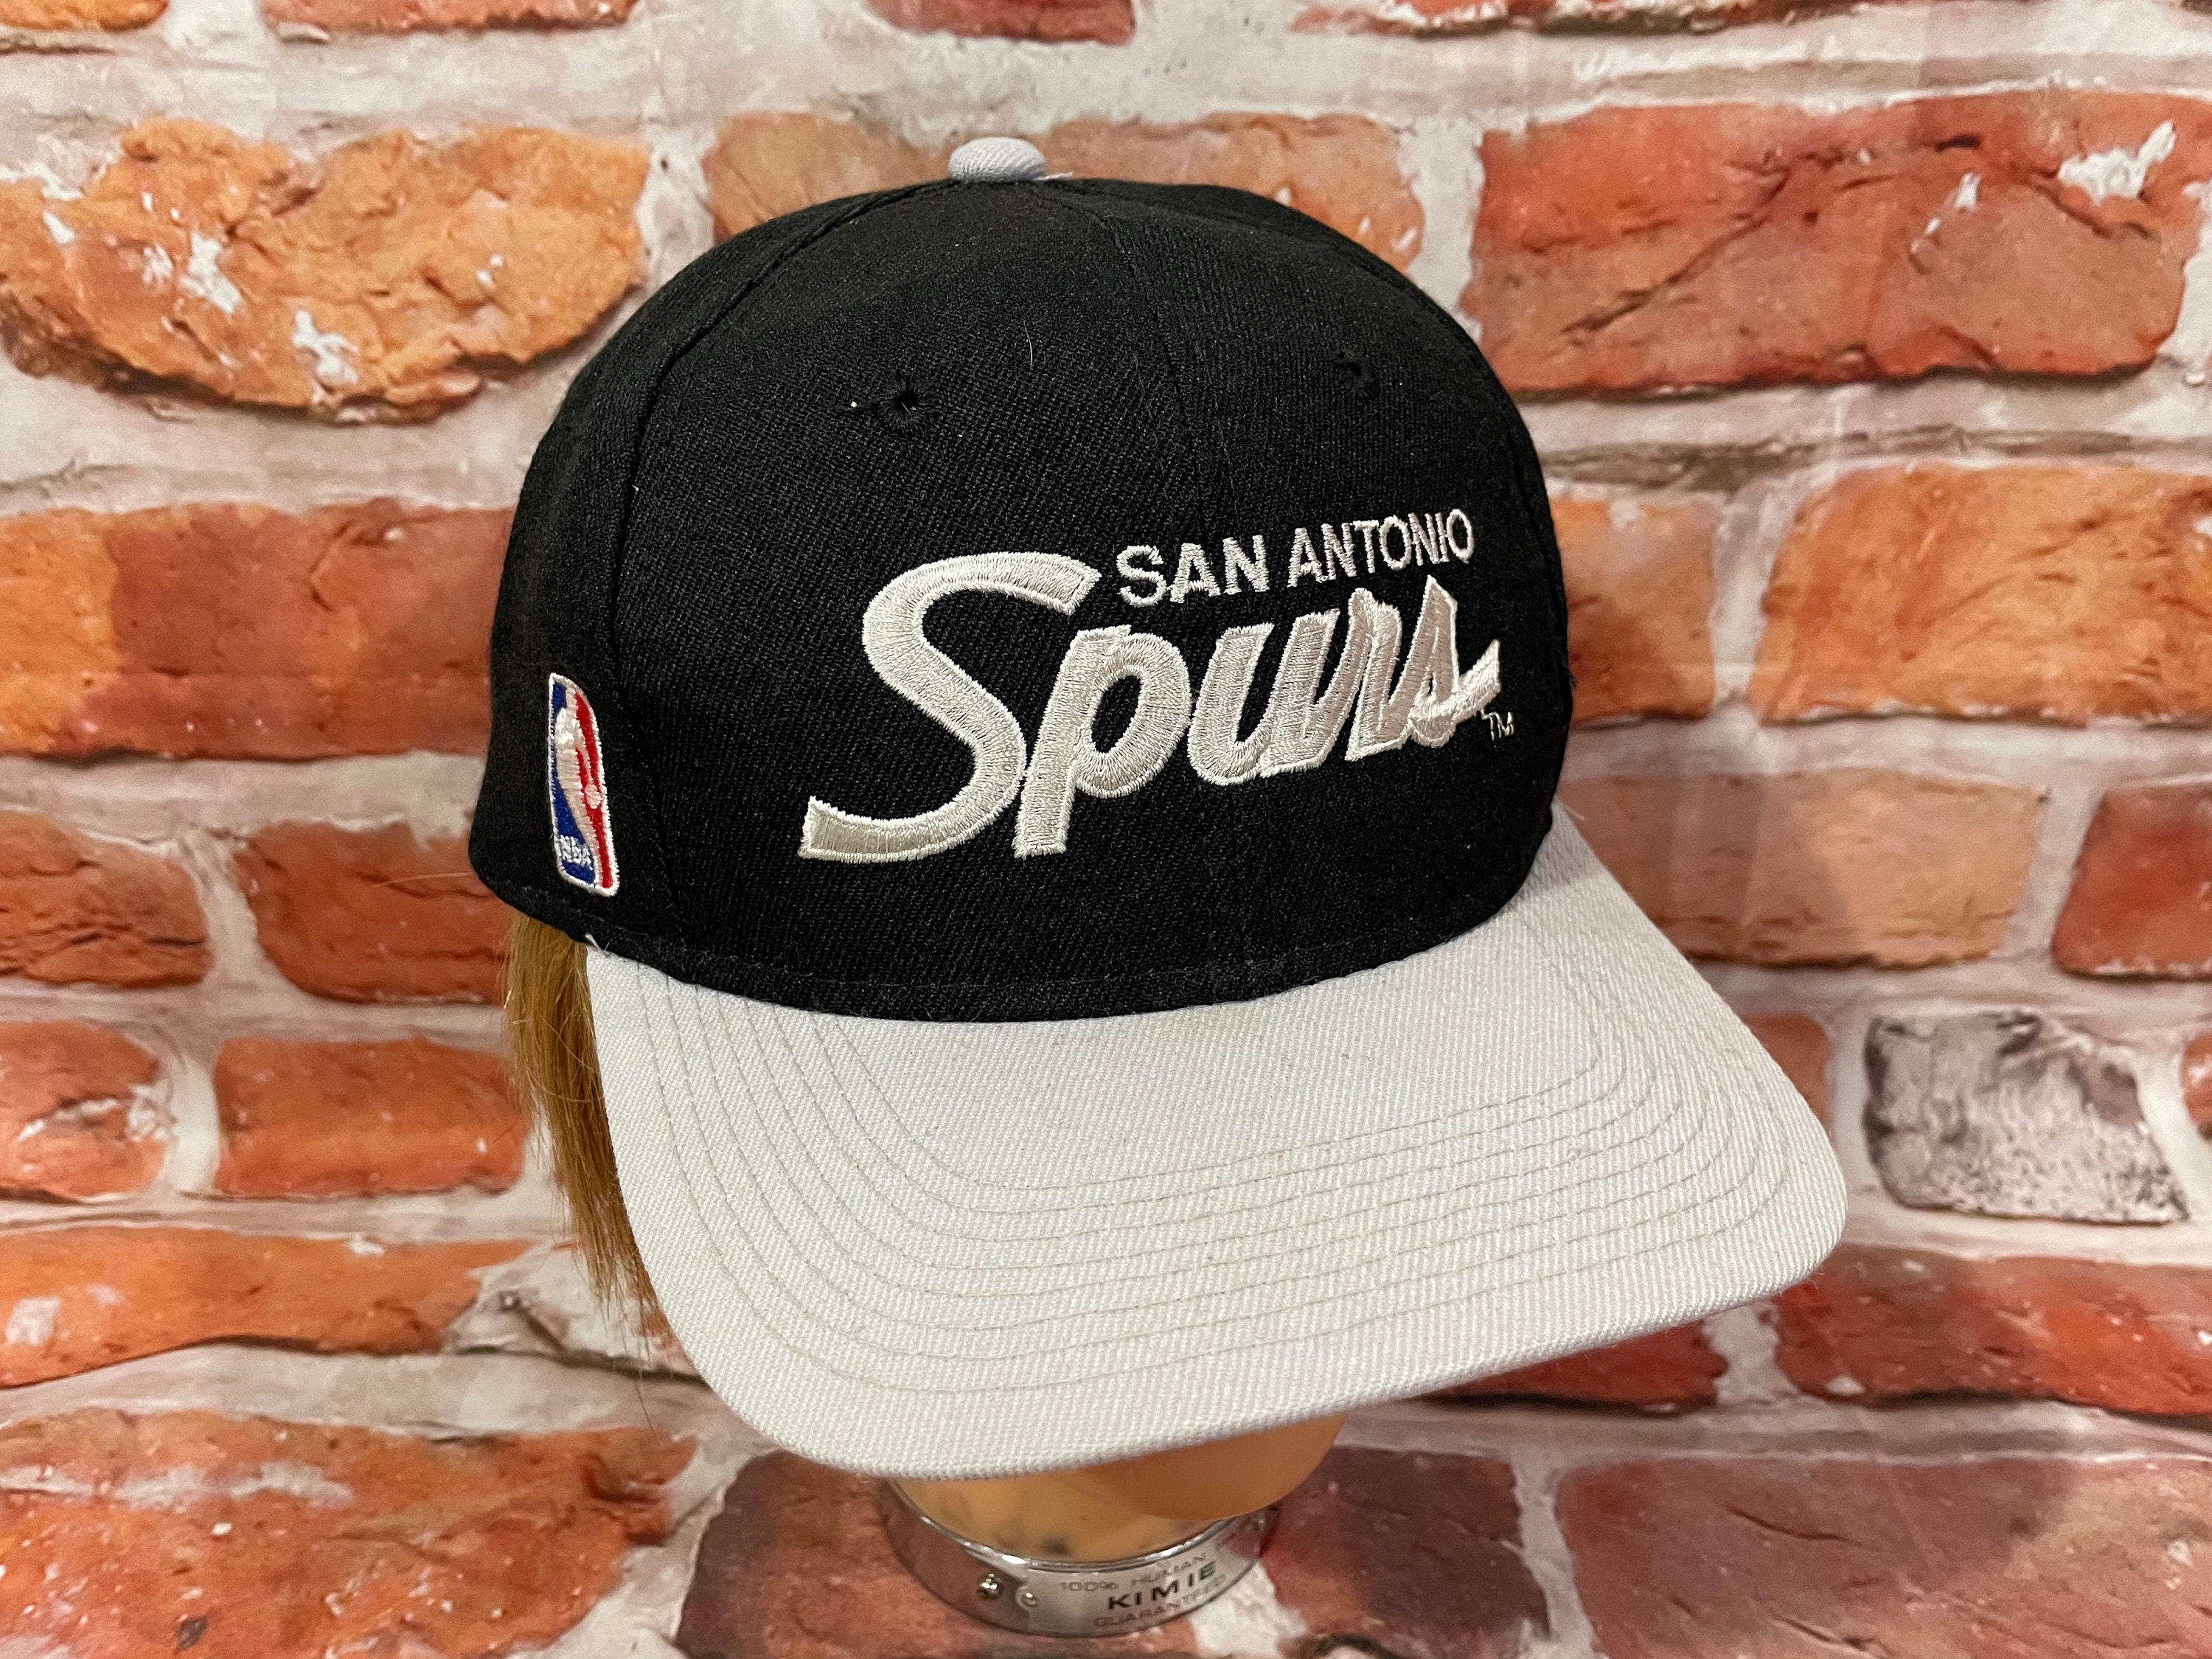 Spurs' retro-inspired streetwear dribbles into San Antonio for limited time  - CultureMap San Antonio